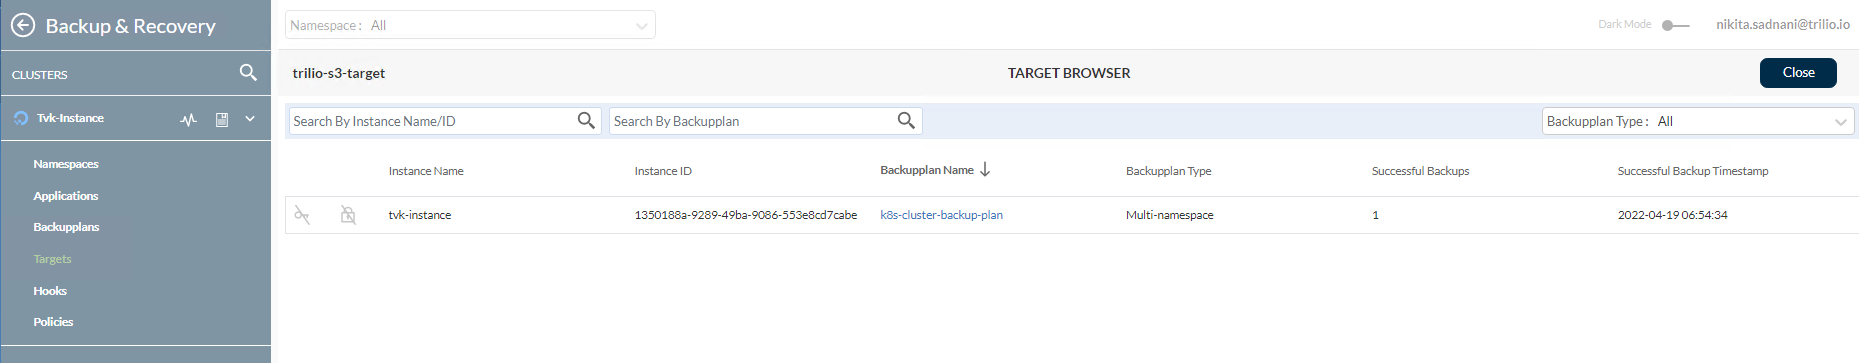 Screencapture showing the TVK target browser